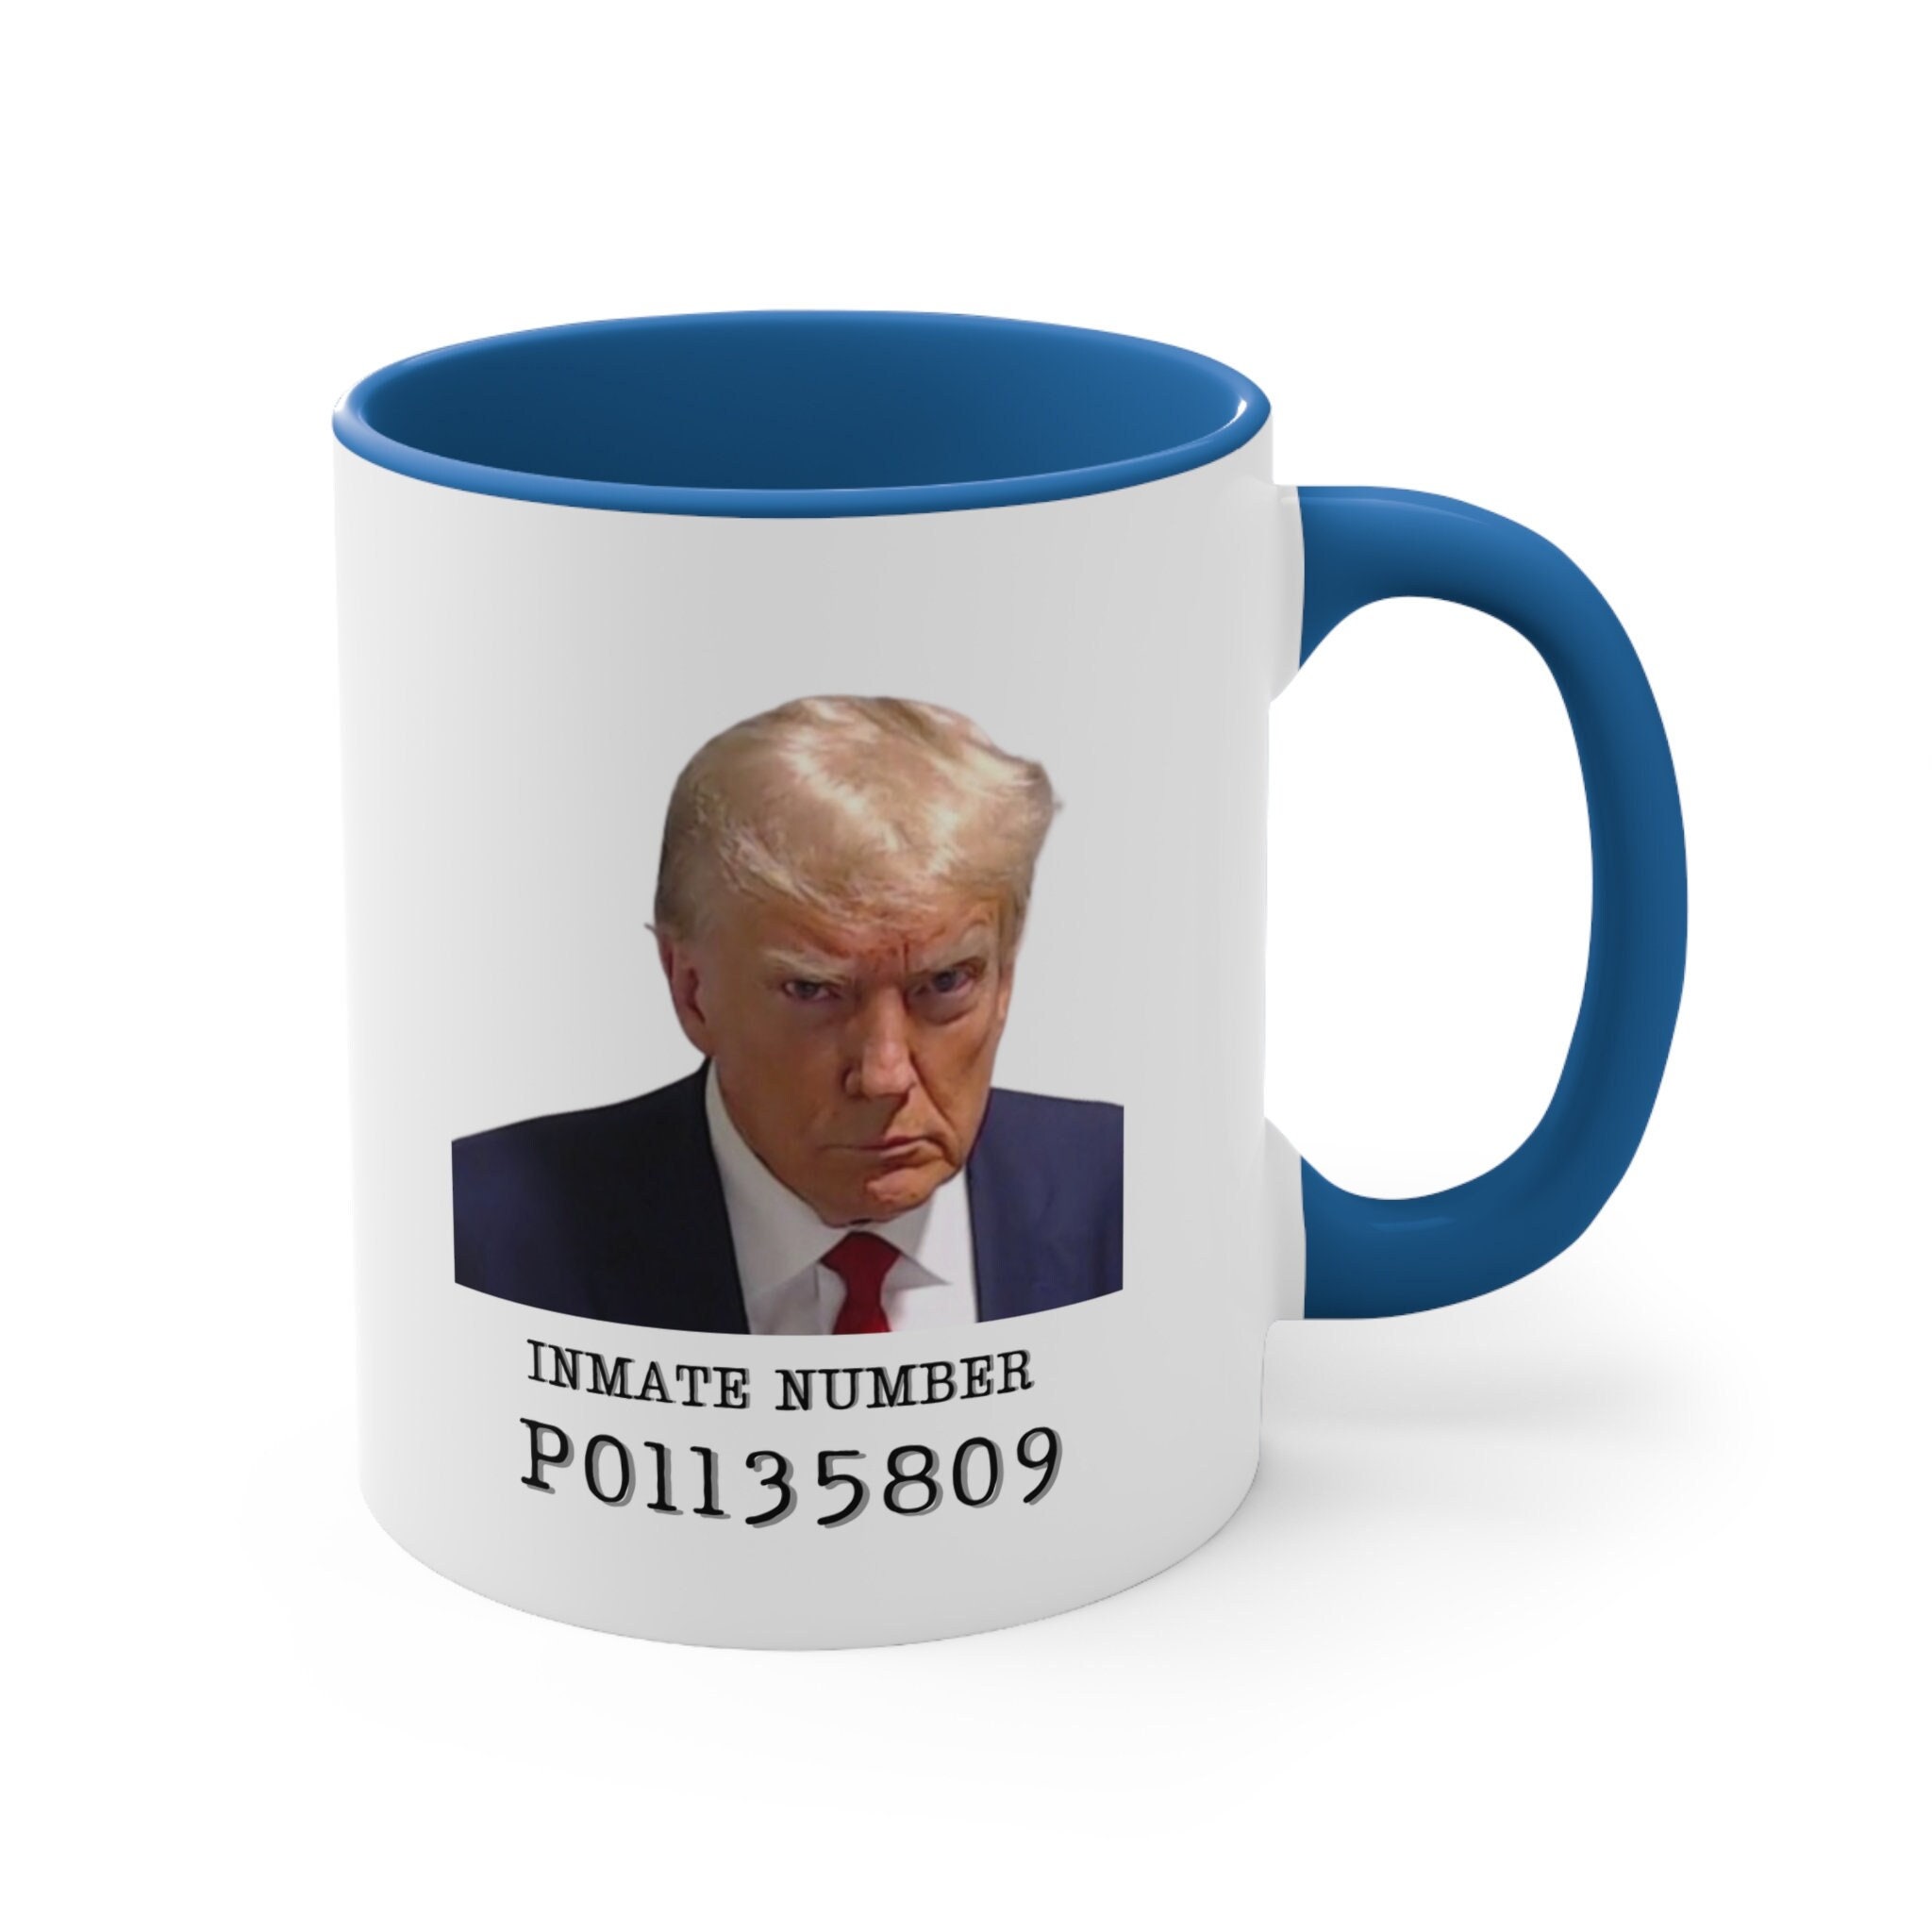 Trump Mugshot - 11 Ounce Coffee Mug - Trump 2023 Jail Mugshot - Coffee Cup  (WHITE)